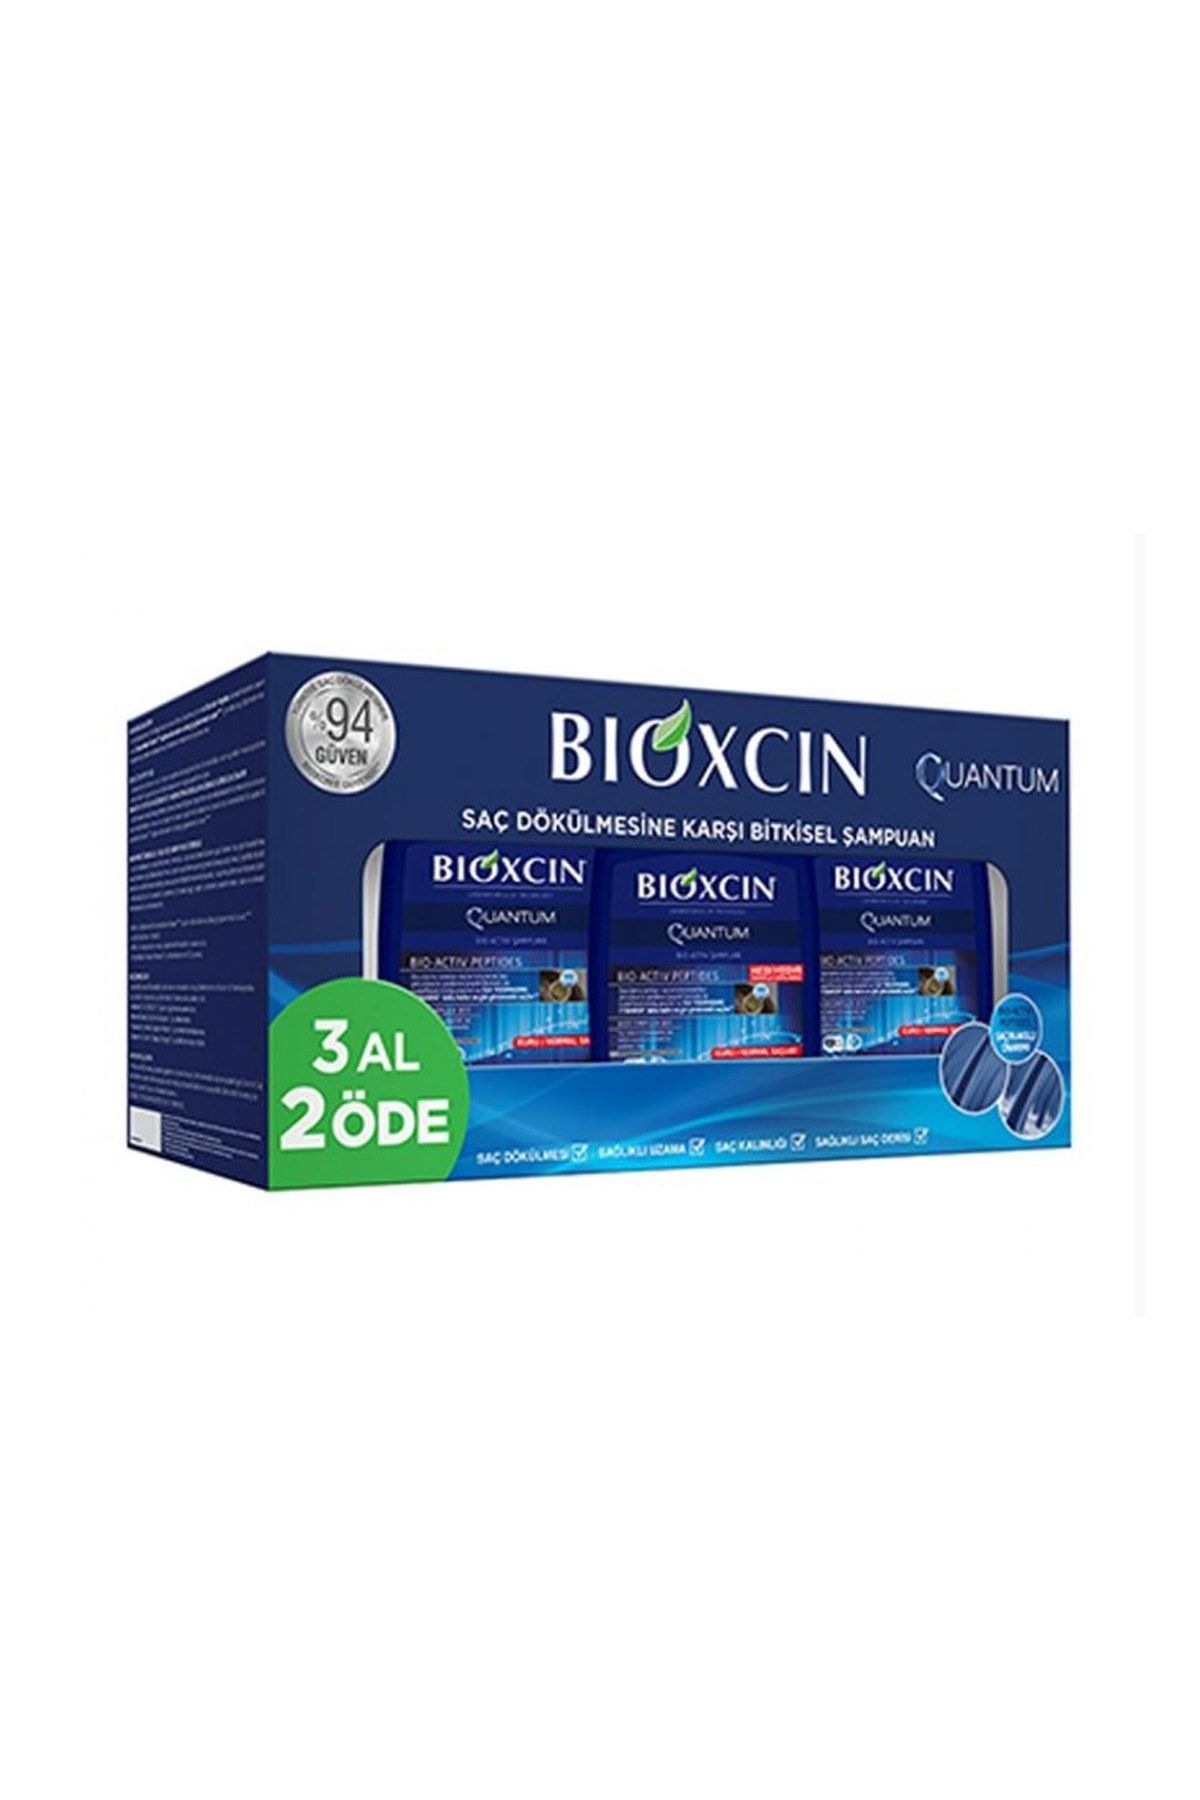 Bioxcin Quantum Şampuan 3 Al 2 Öde Kuru Ve Normal 3x300 Ml -vb808